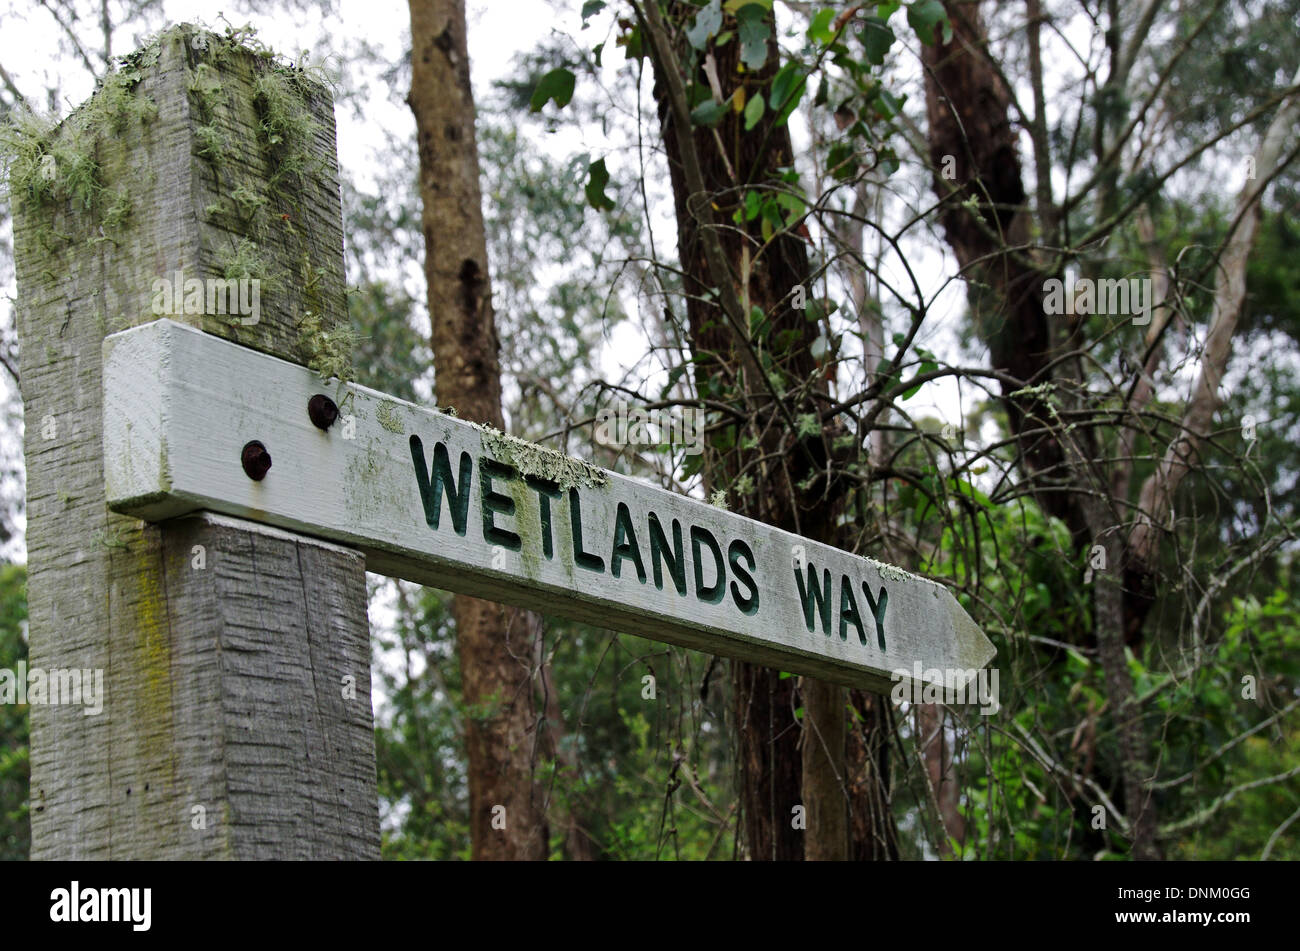 wetlands walking track sign Stock Photo